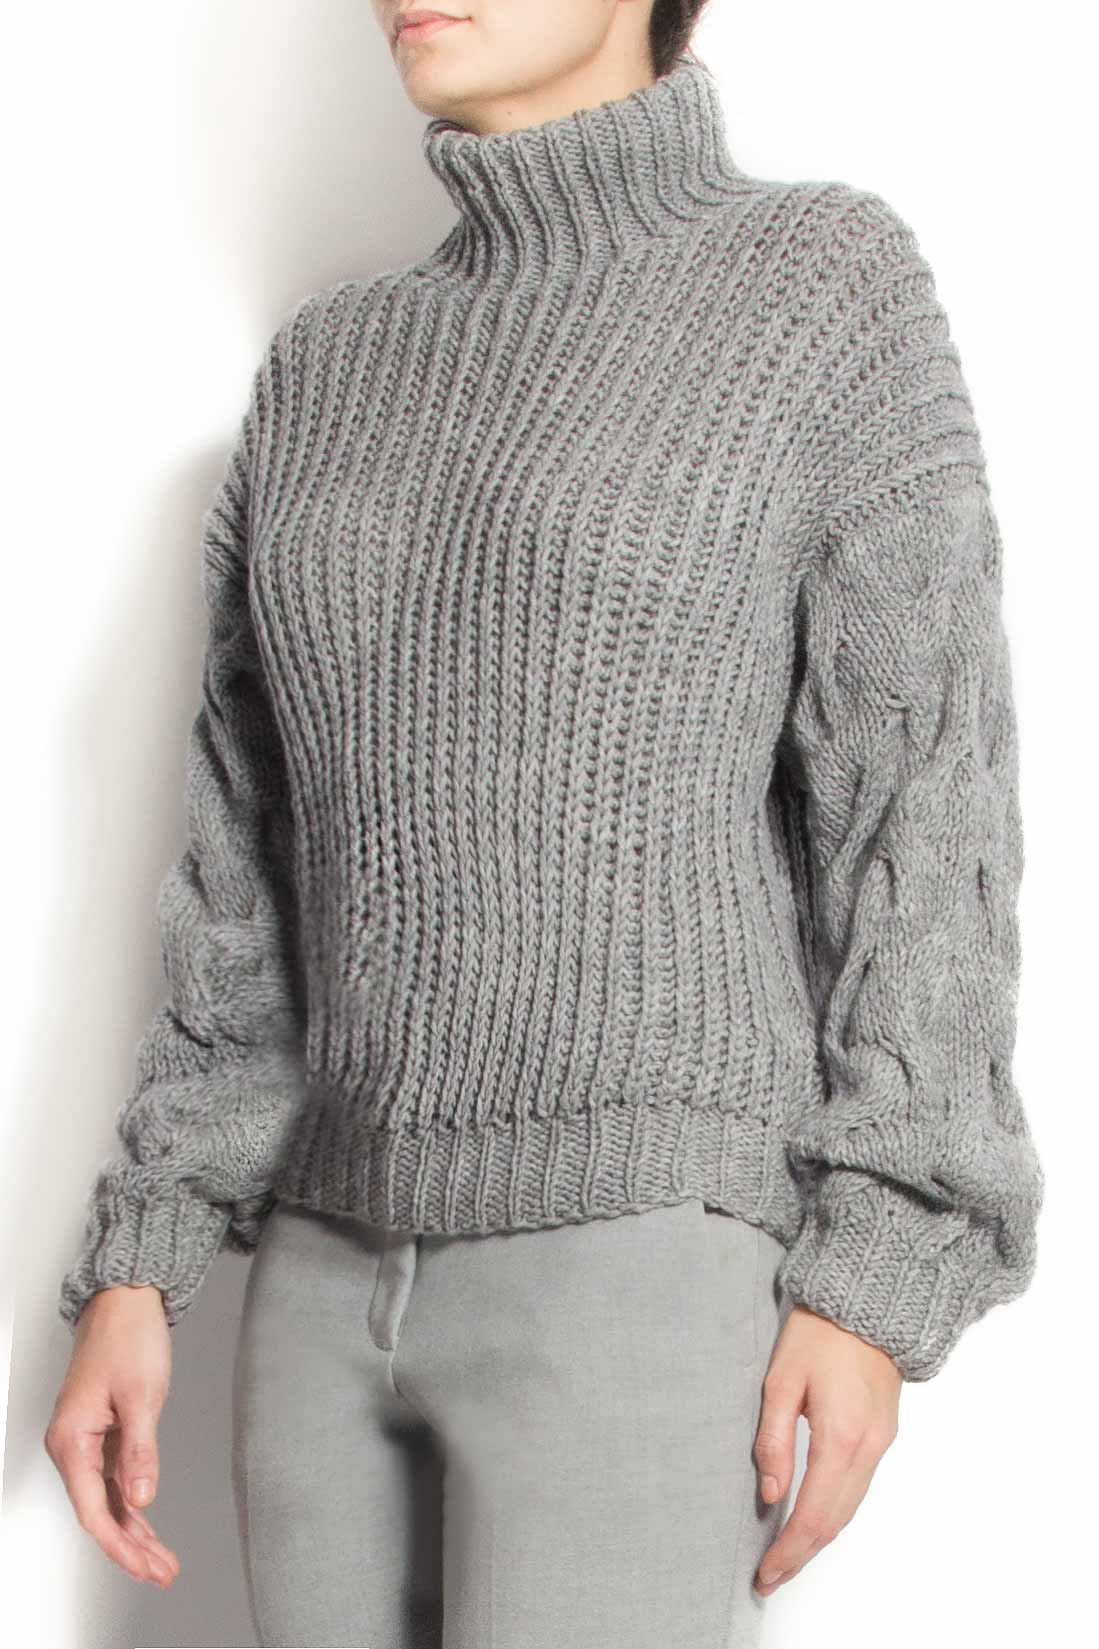 Hand-crochet knit turtleneck sweater Elora Ascott image 1